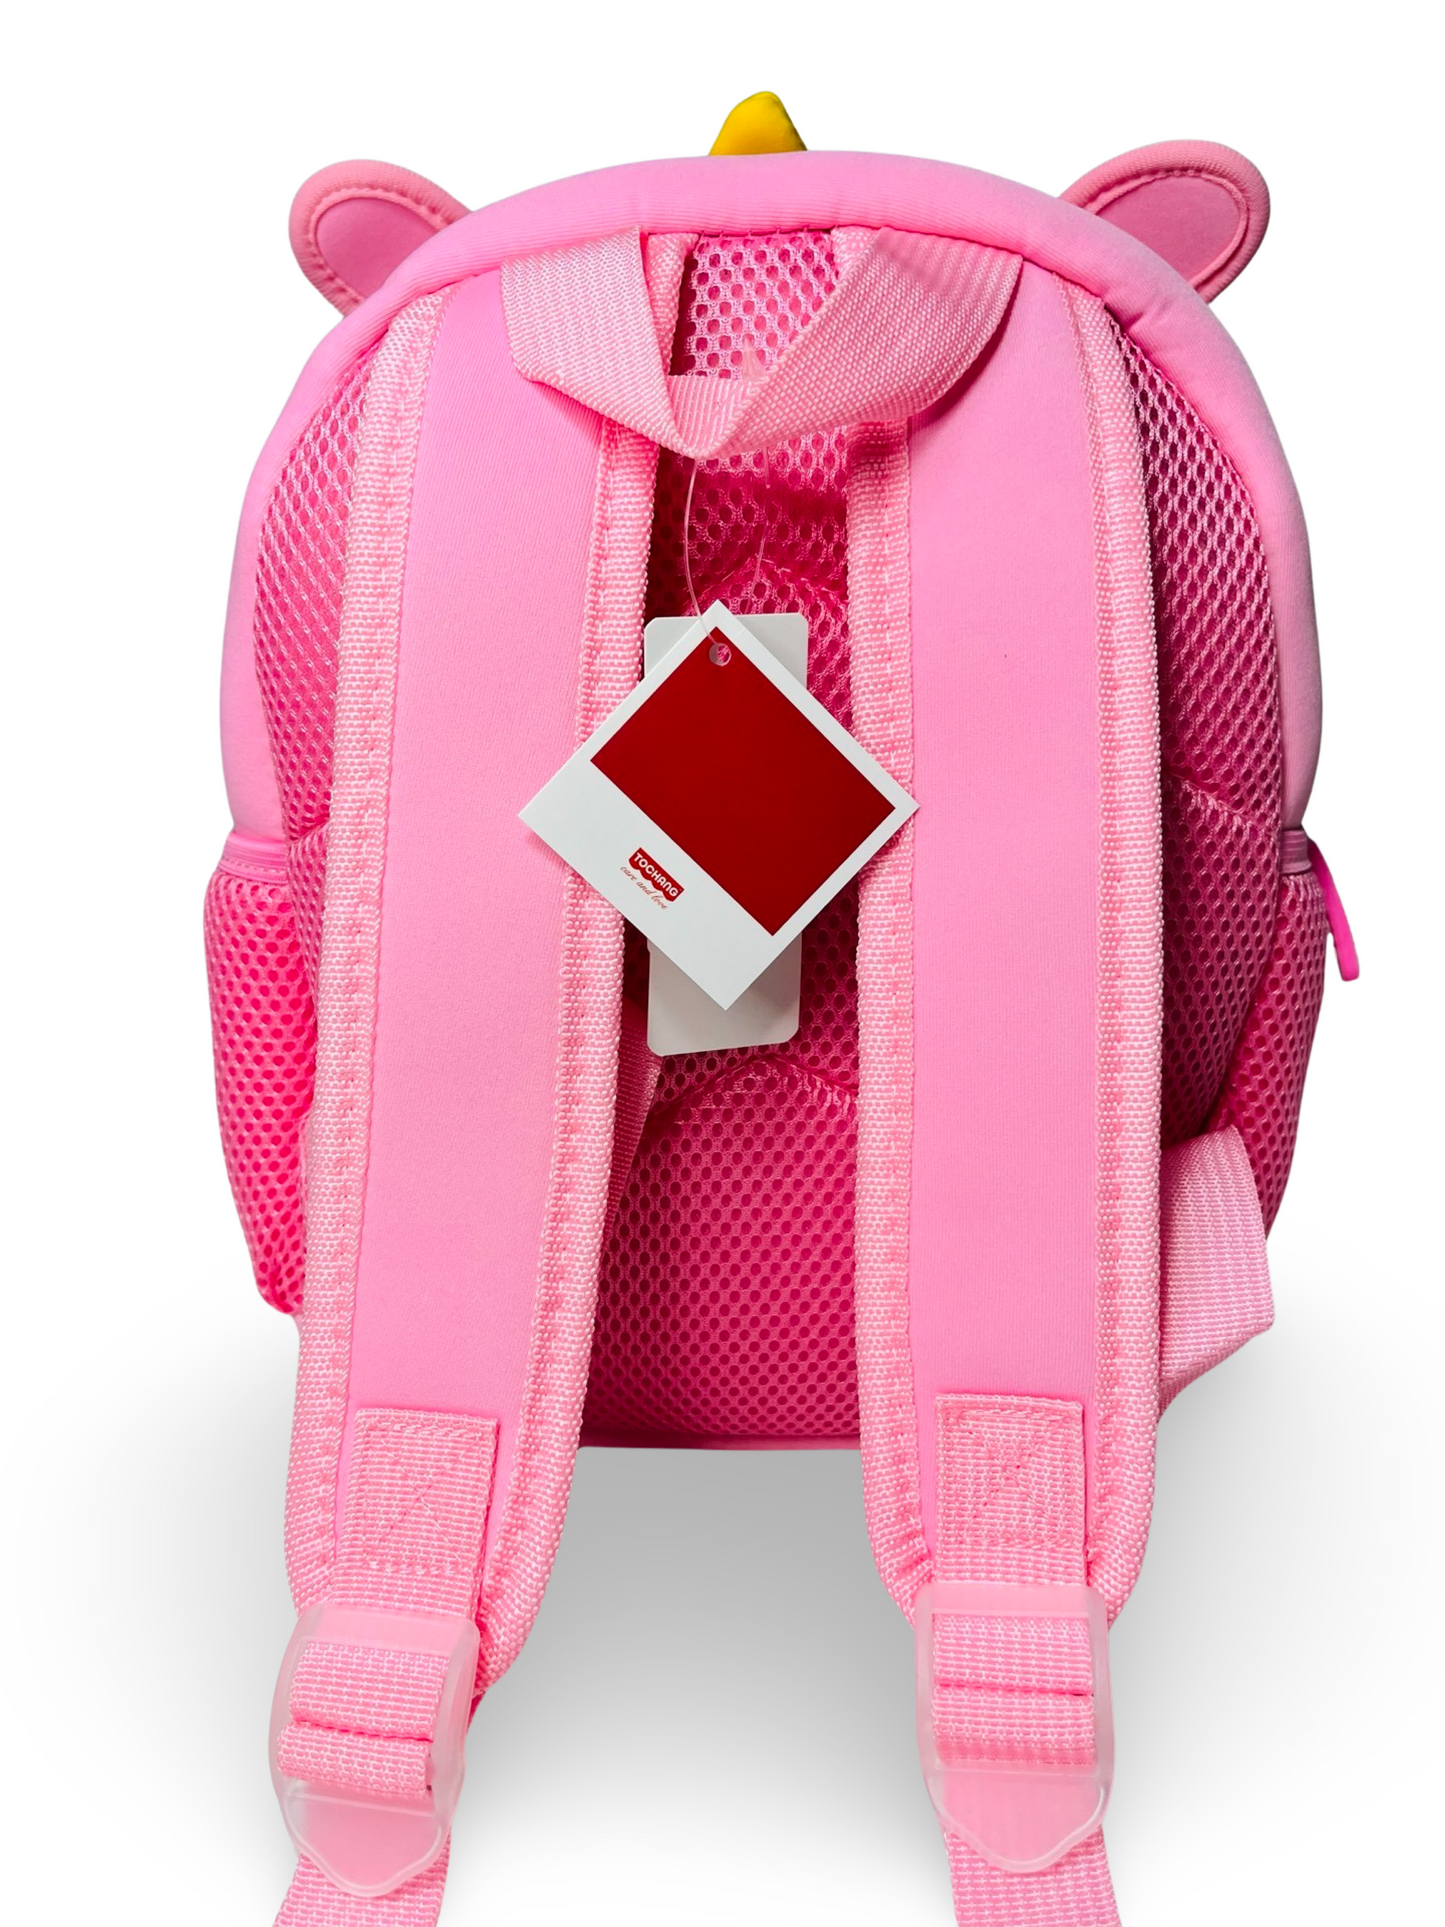 Cute Unicorn Soft Plush Backpack for kids (Pink)